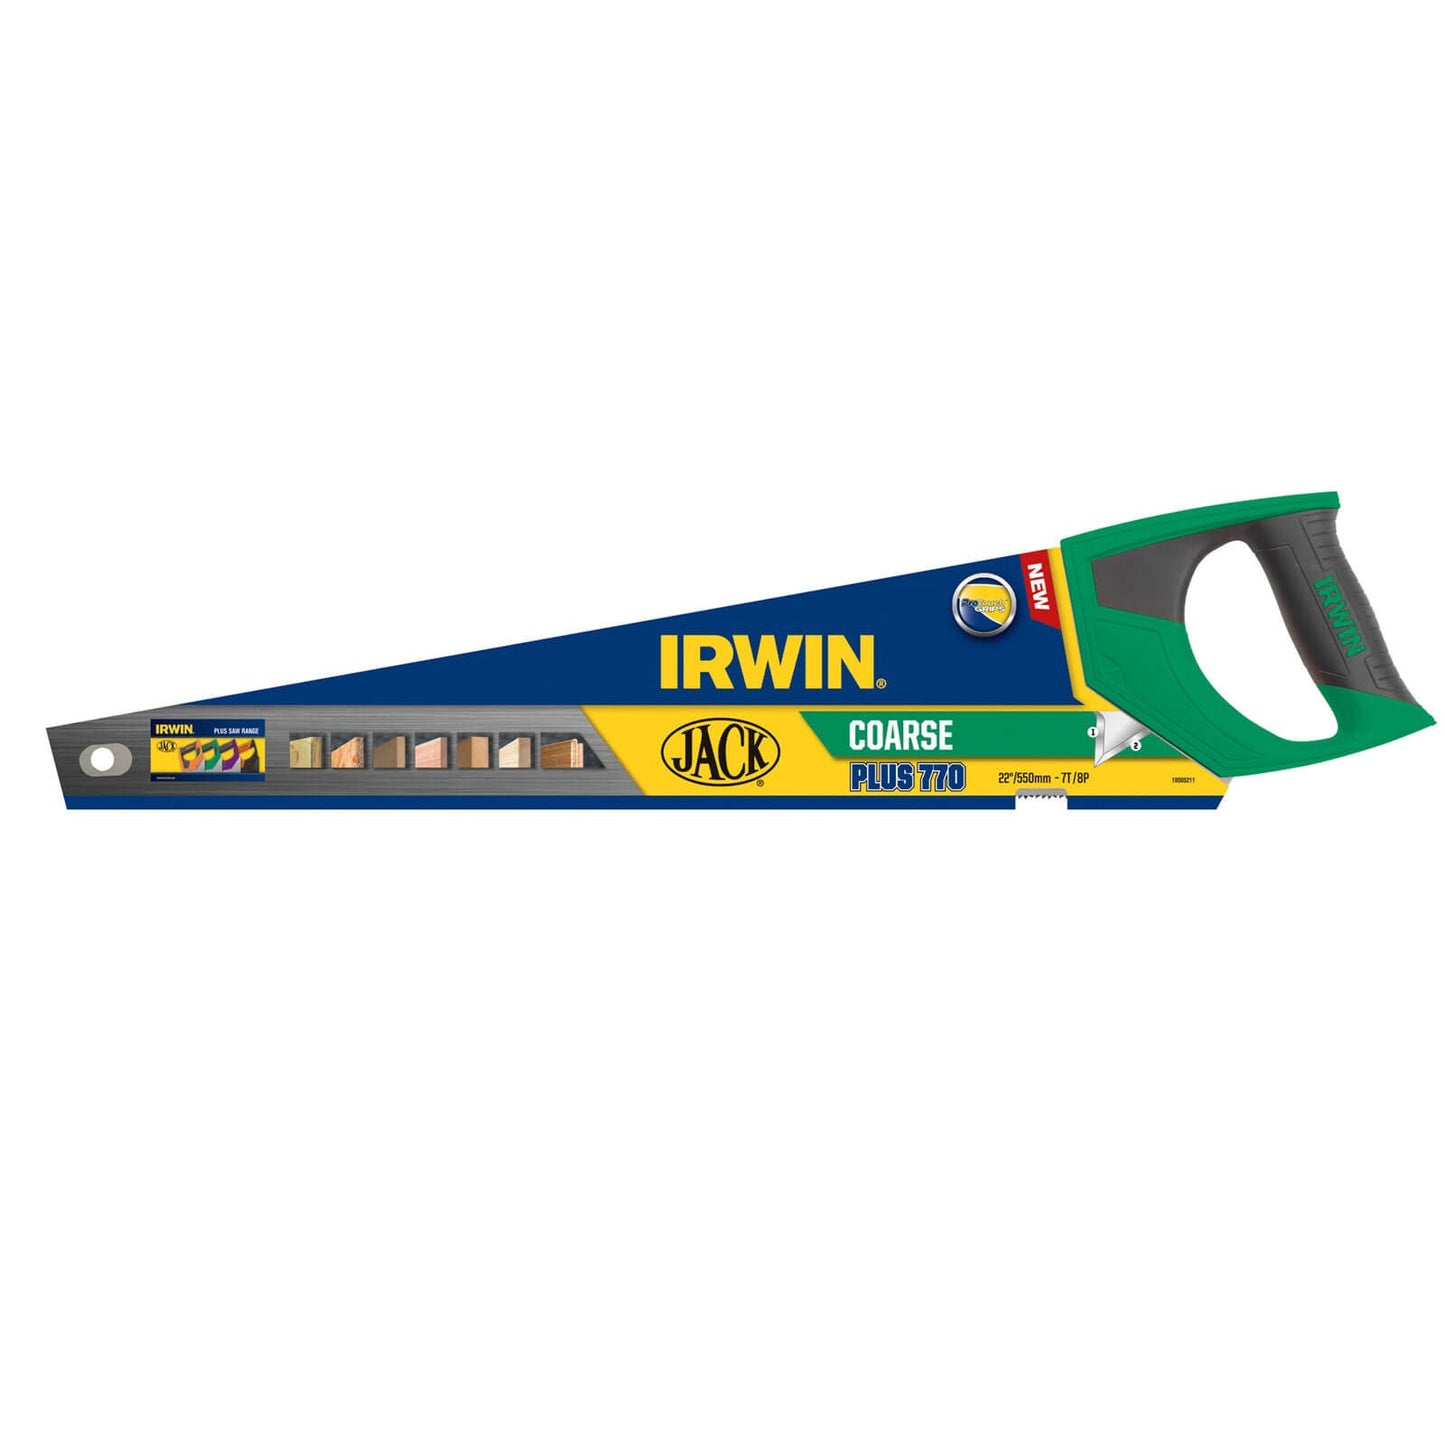 Irwin Jack Plus Coarse Cut Handsaw